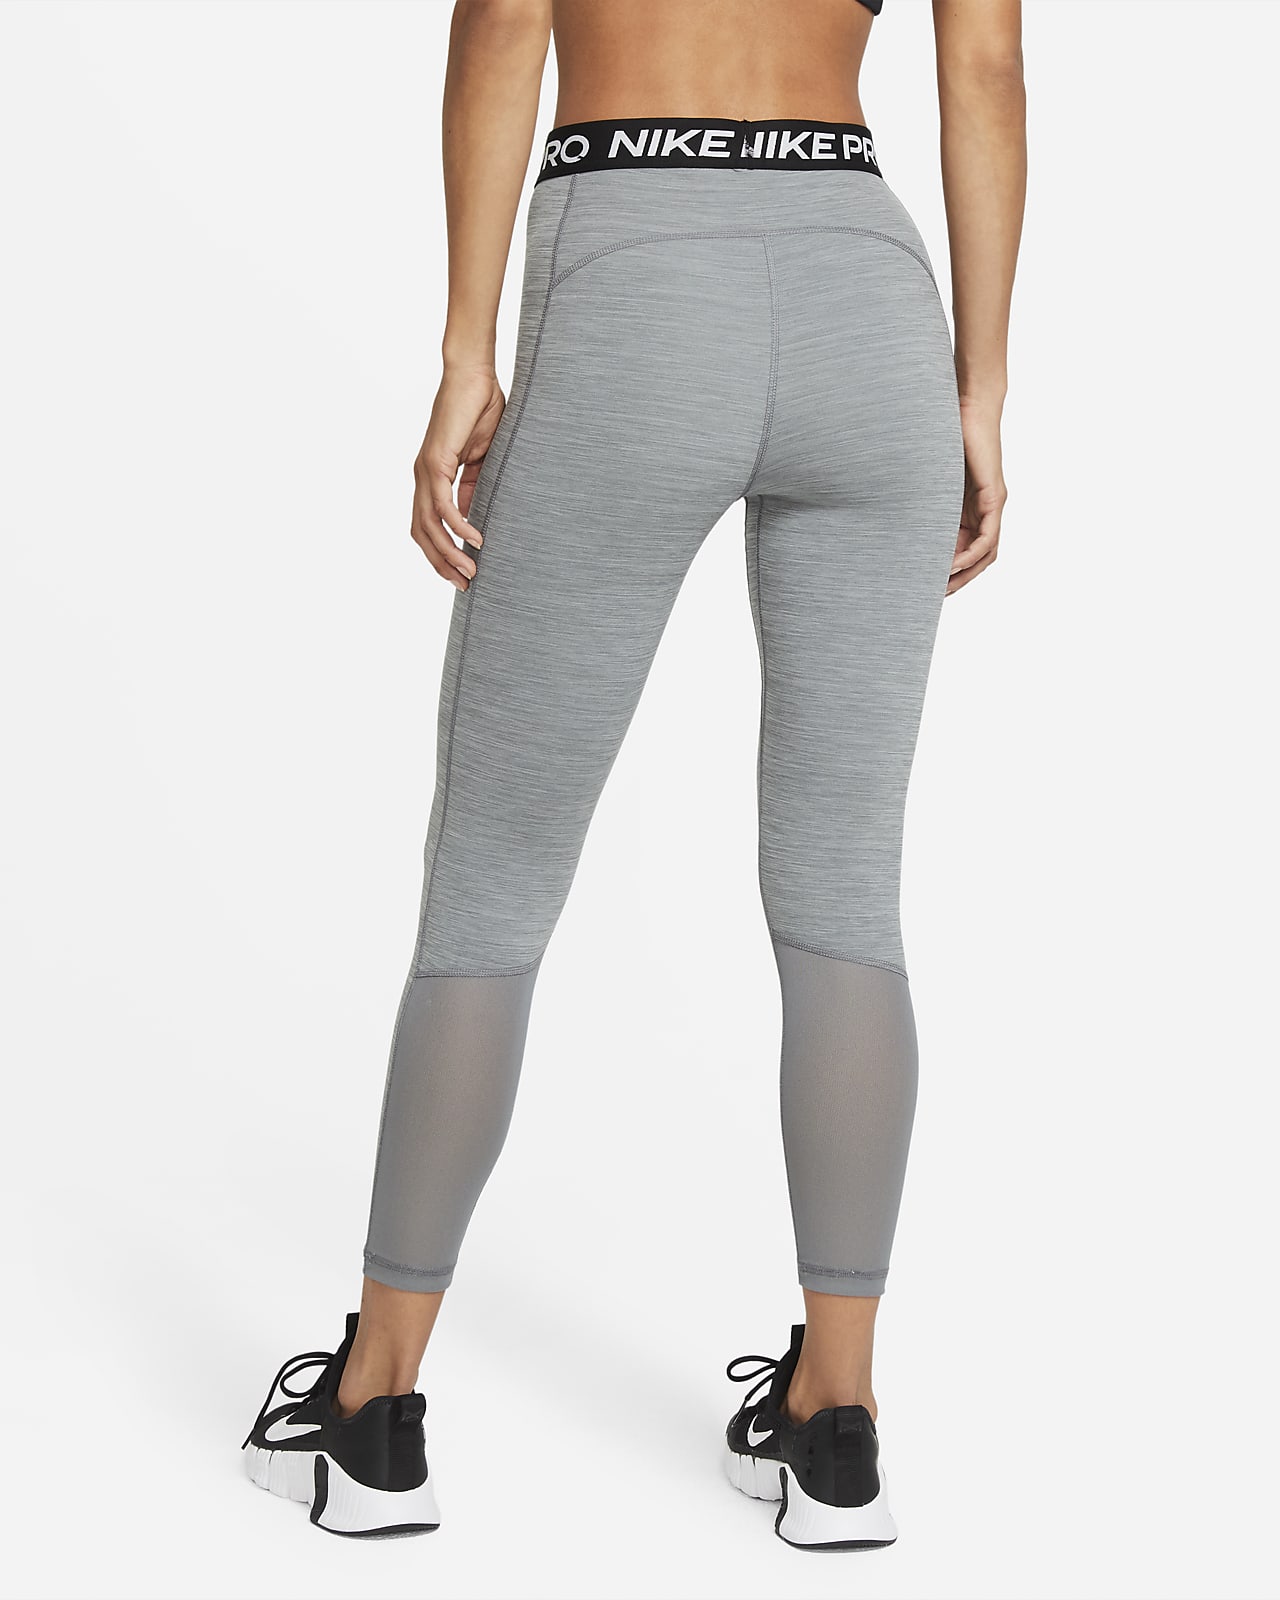 Nike Leggings deportivos para mujer, color gris, talla S, Gris